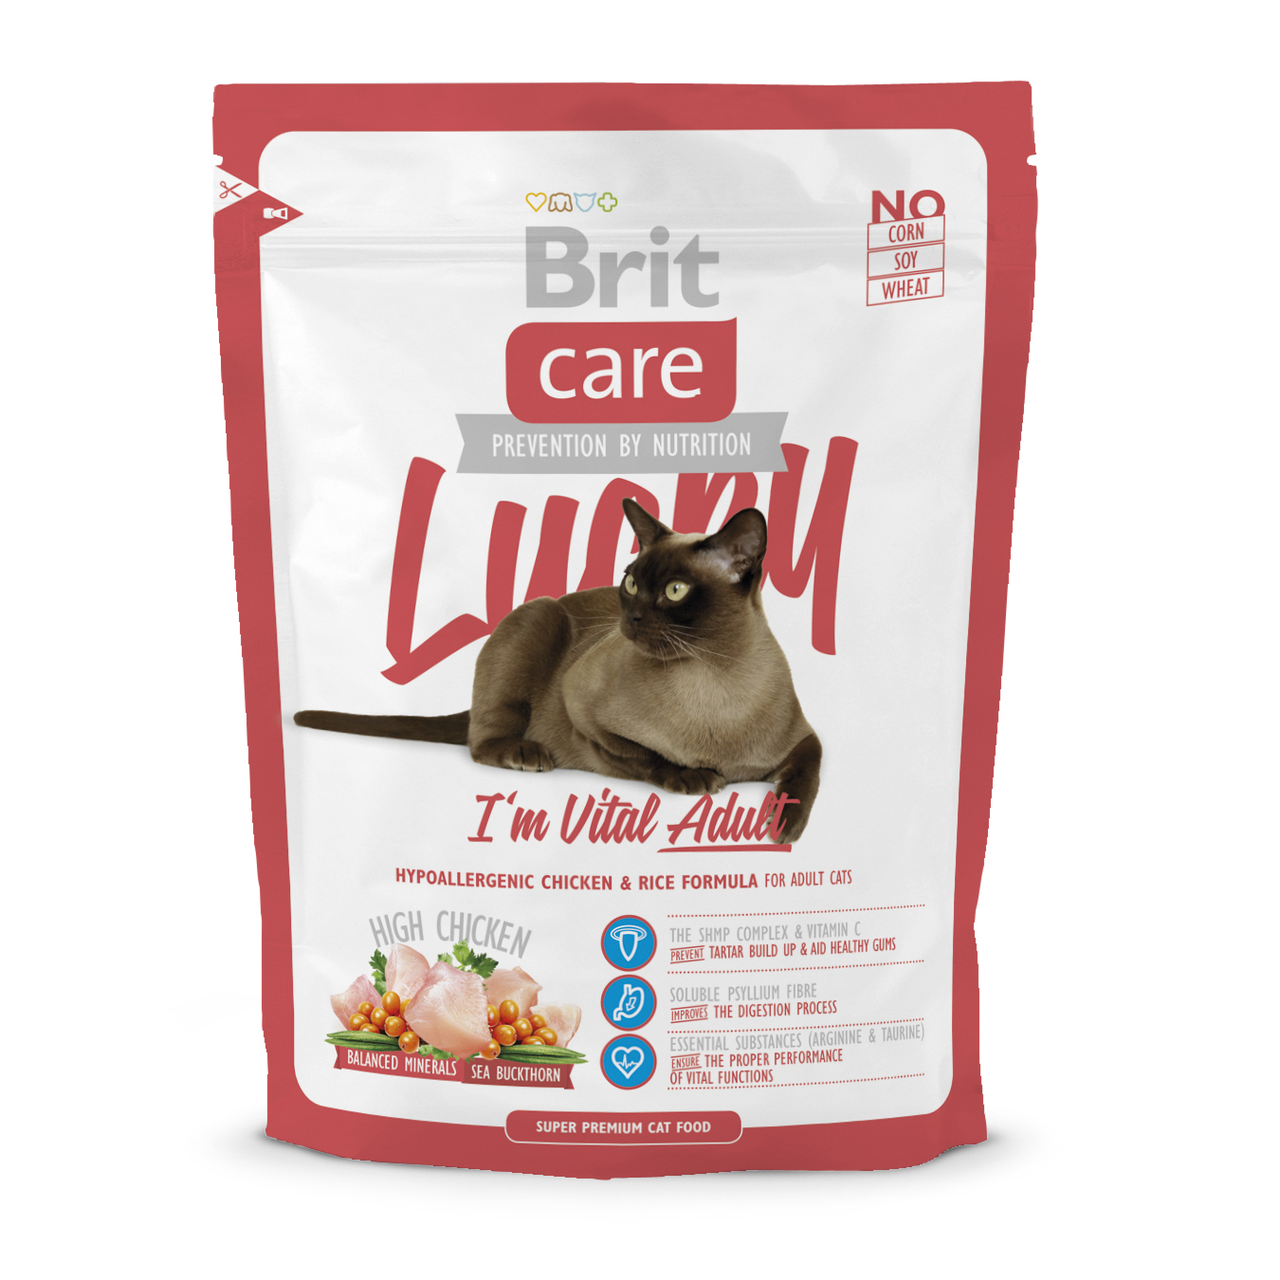 Care Cat Lucky Im Vital Adult корм для взрослых кошек, с курицей и рисом, Brit